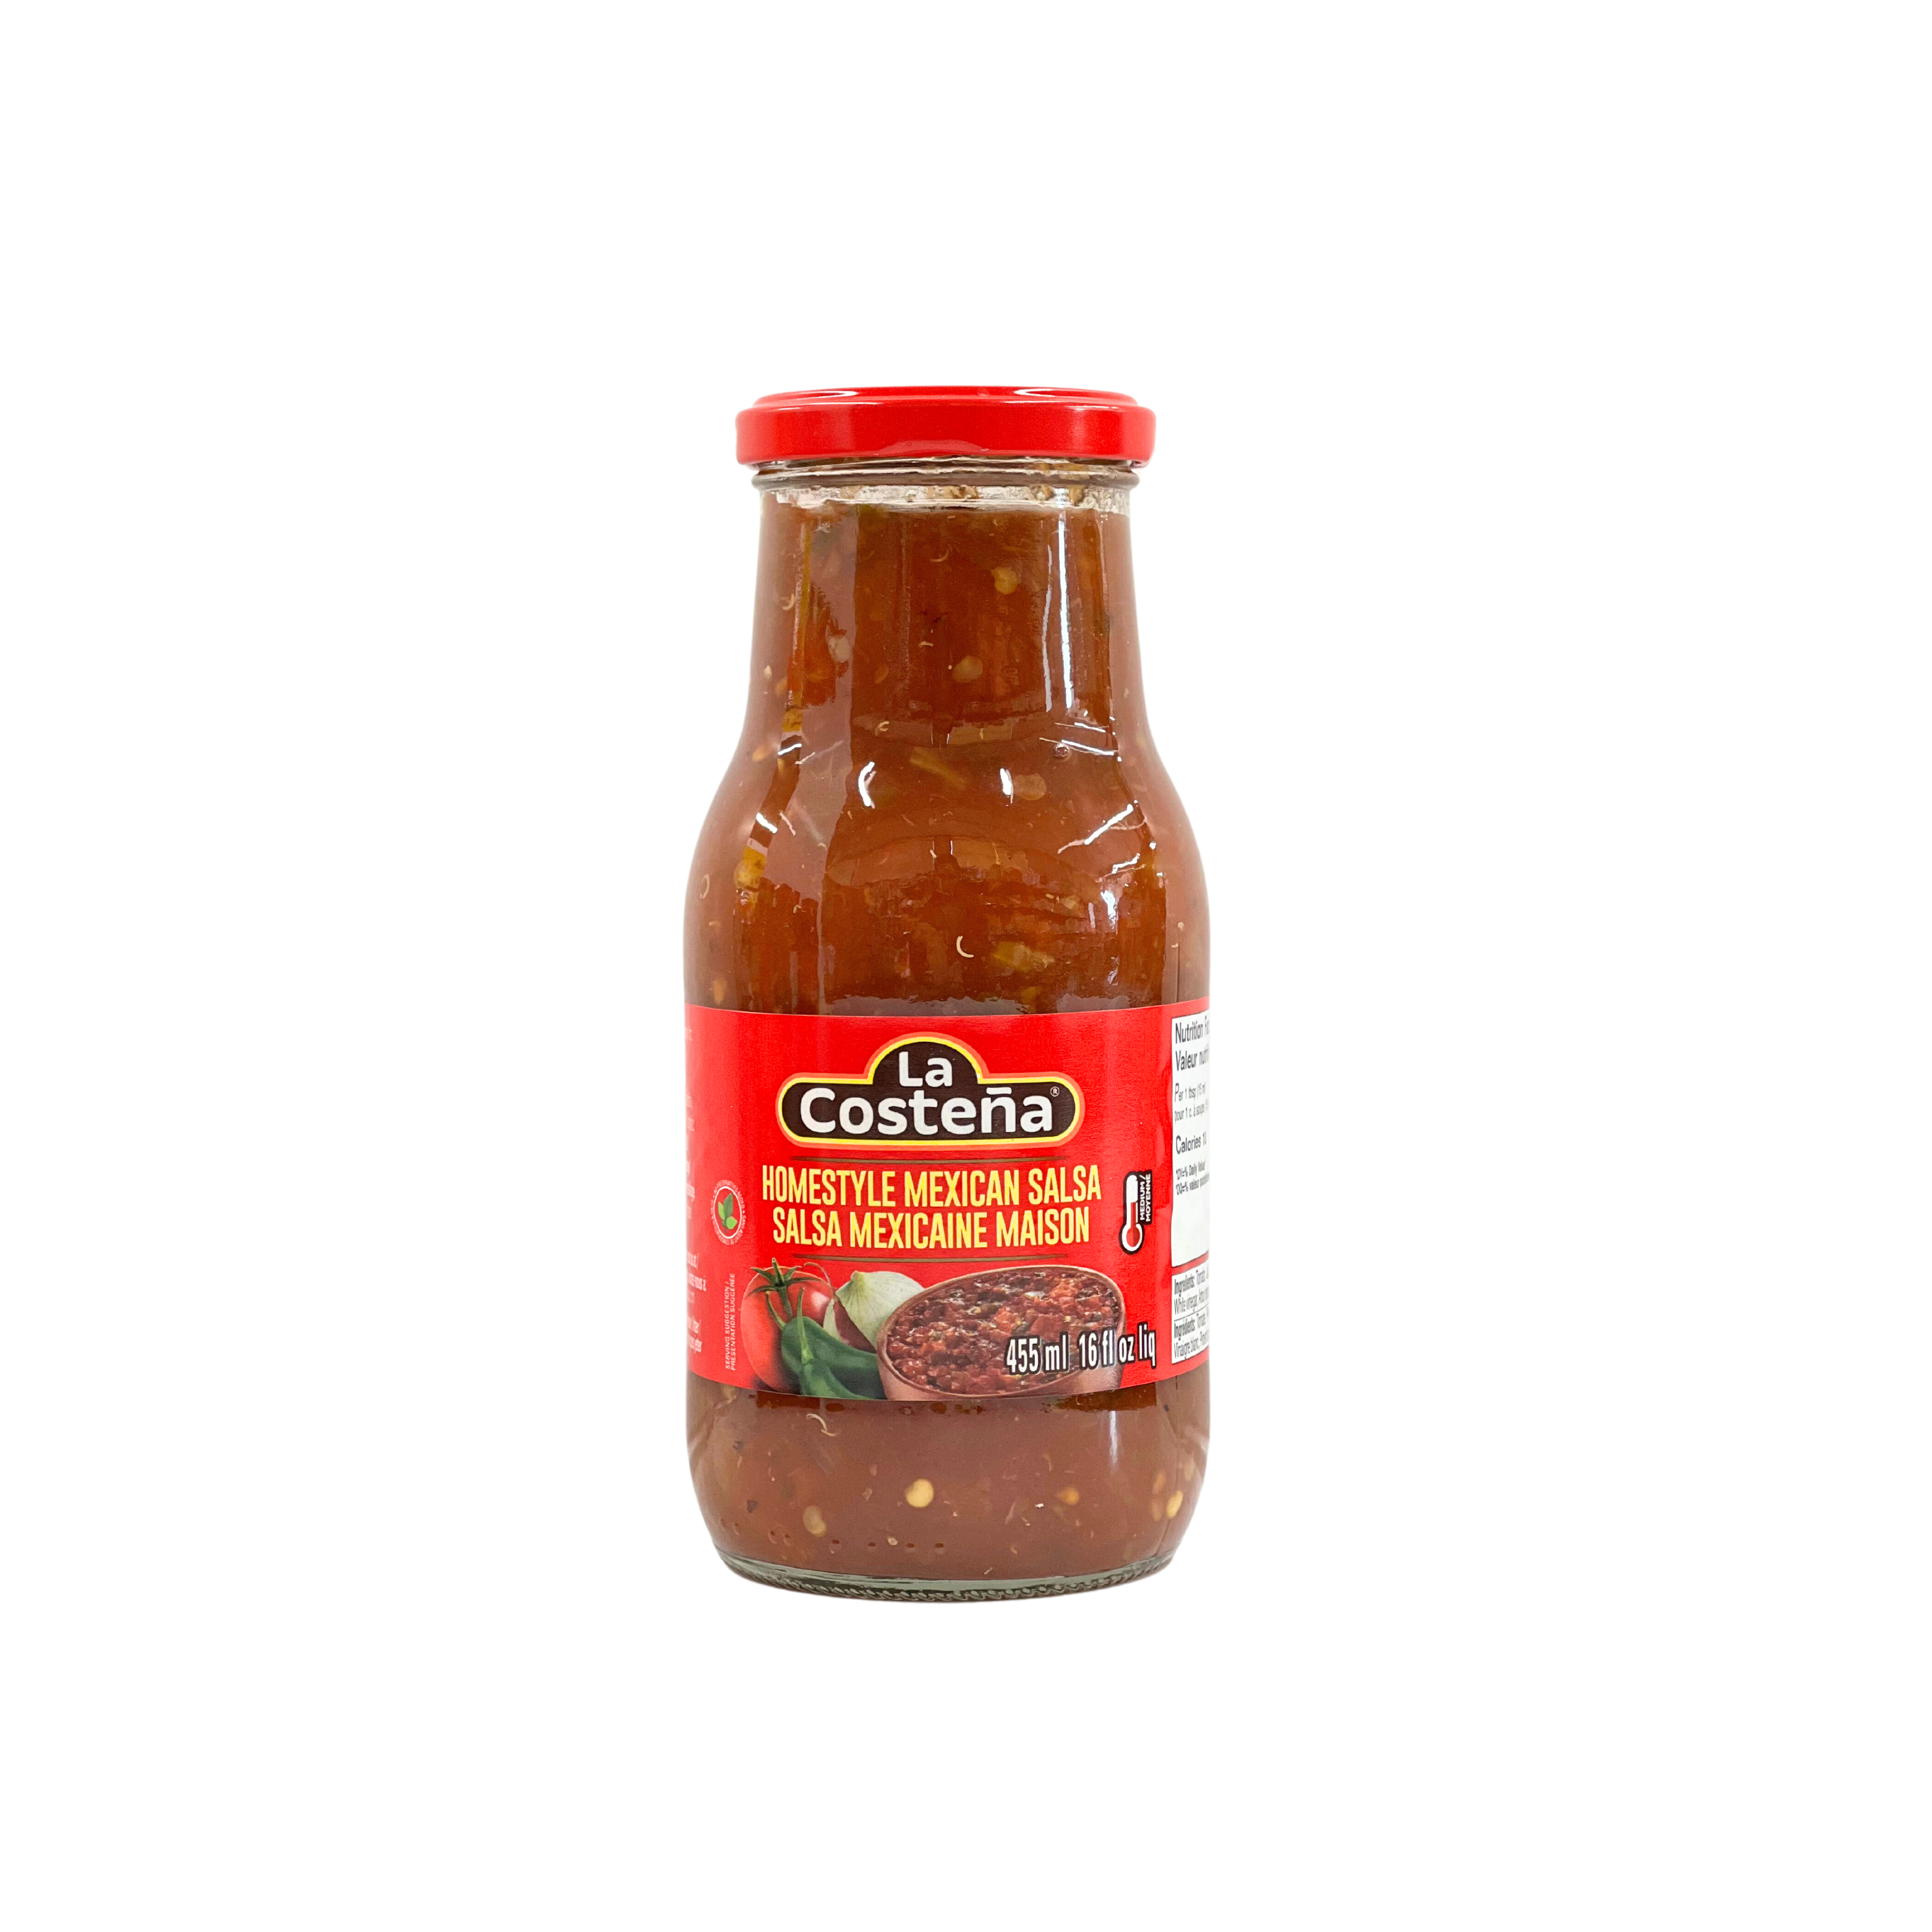 La Costena Homestyle Mexican Sauce Bottle 455ml